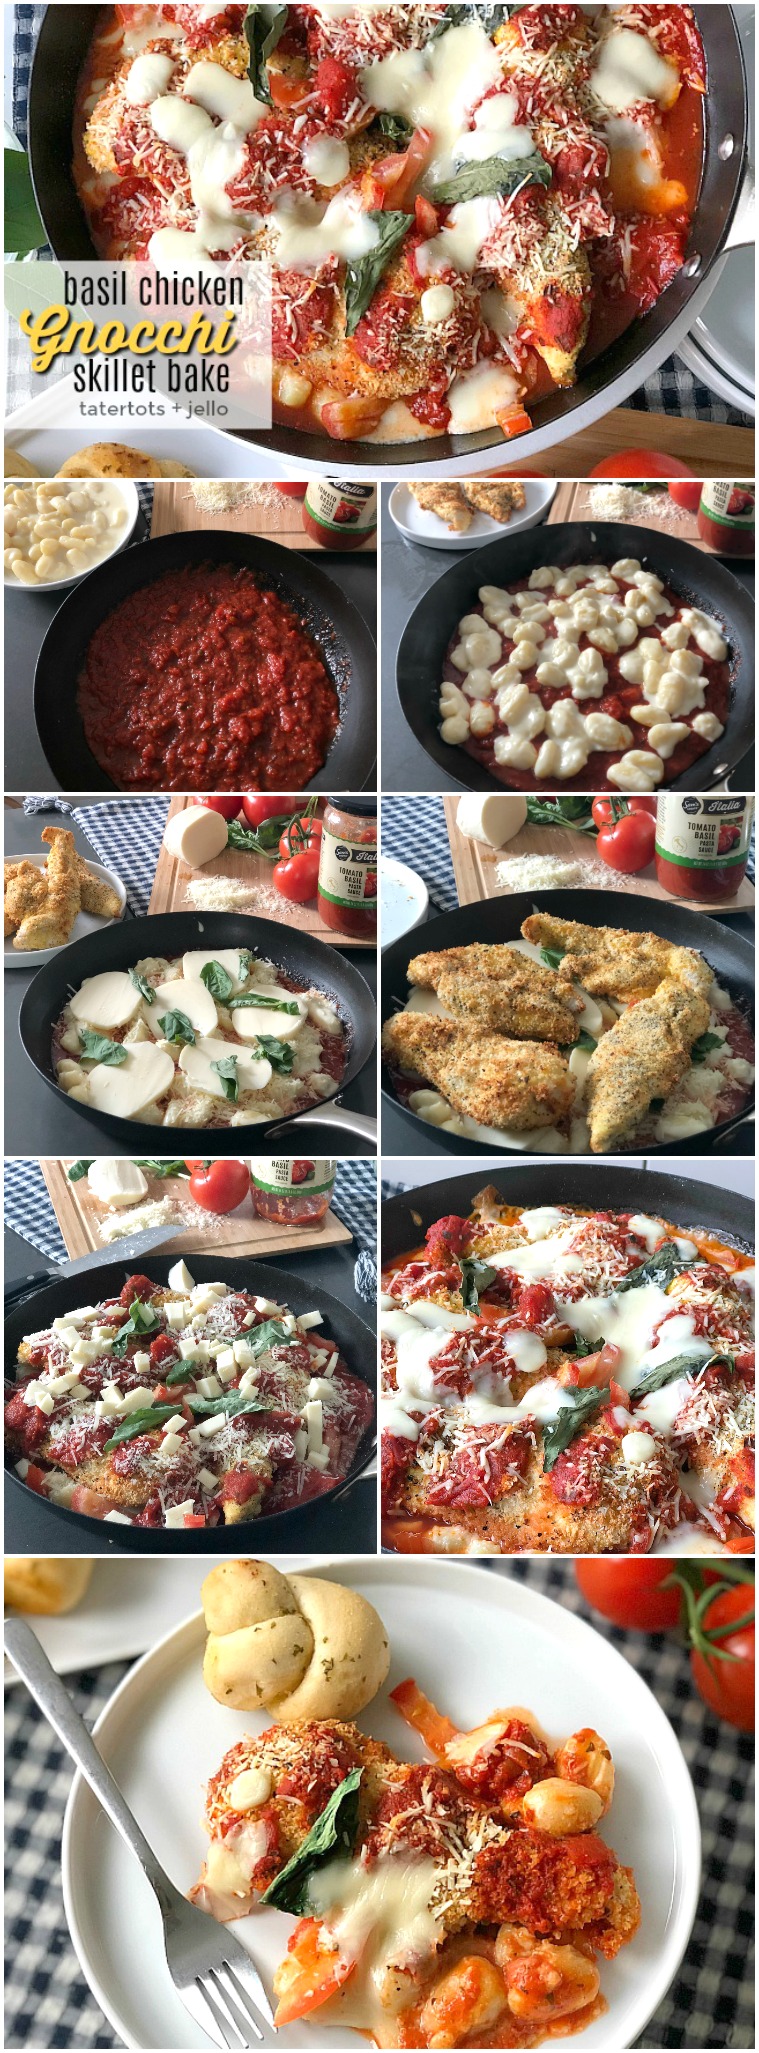 Basil Chicken Gnocchi Skillet Bake - with @Walmart's new Sam’s Choice Italia line. Basil Chicken Gnocchi Skillet Bake. Layers of tomato basil pasta sauce, creamy gnocchi, crispy breaded chicken, fresh basil and gooey cheese are baked for a hearty Italian dish everyone loves! #sponsored #WalmartWOW #ItalianRecipe #RecipeKidsLove #GnocchiRecipe